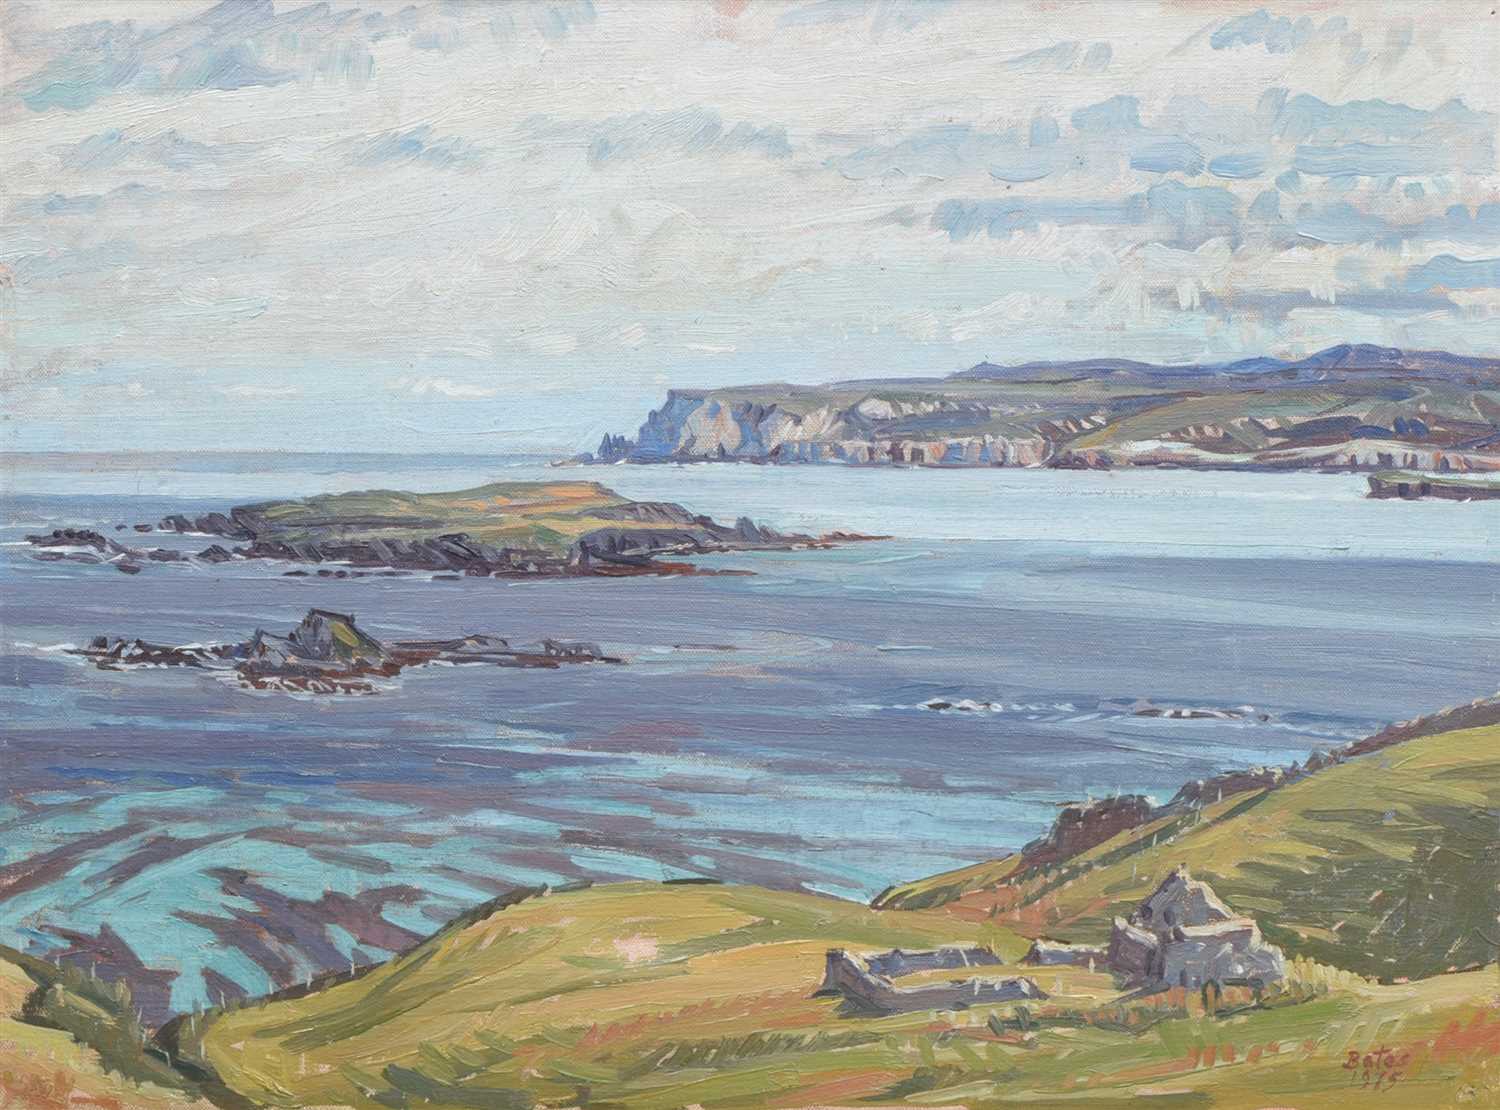 Lot 294 - Bates, 20th century, Coastal scene, oil on canvas.